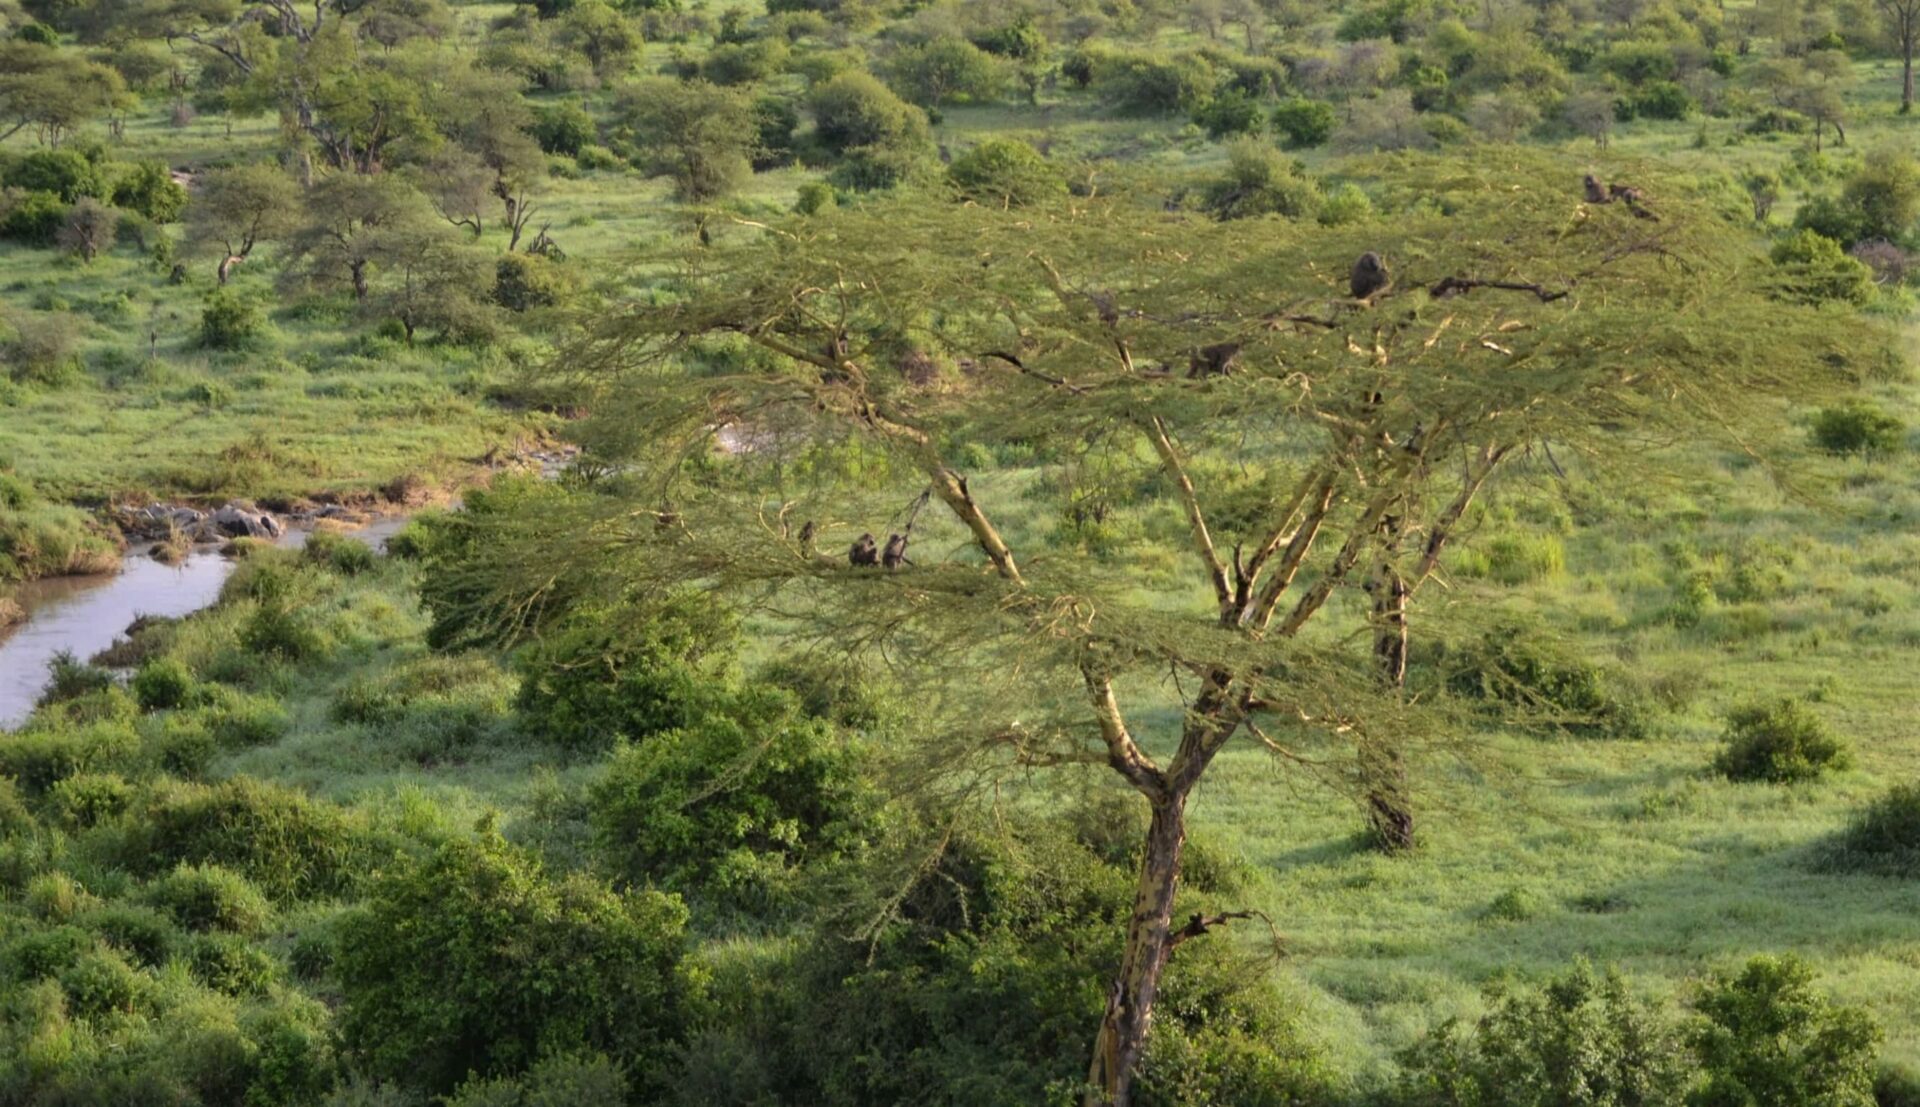 Monkeys on a tree in the Serengeti